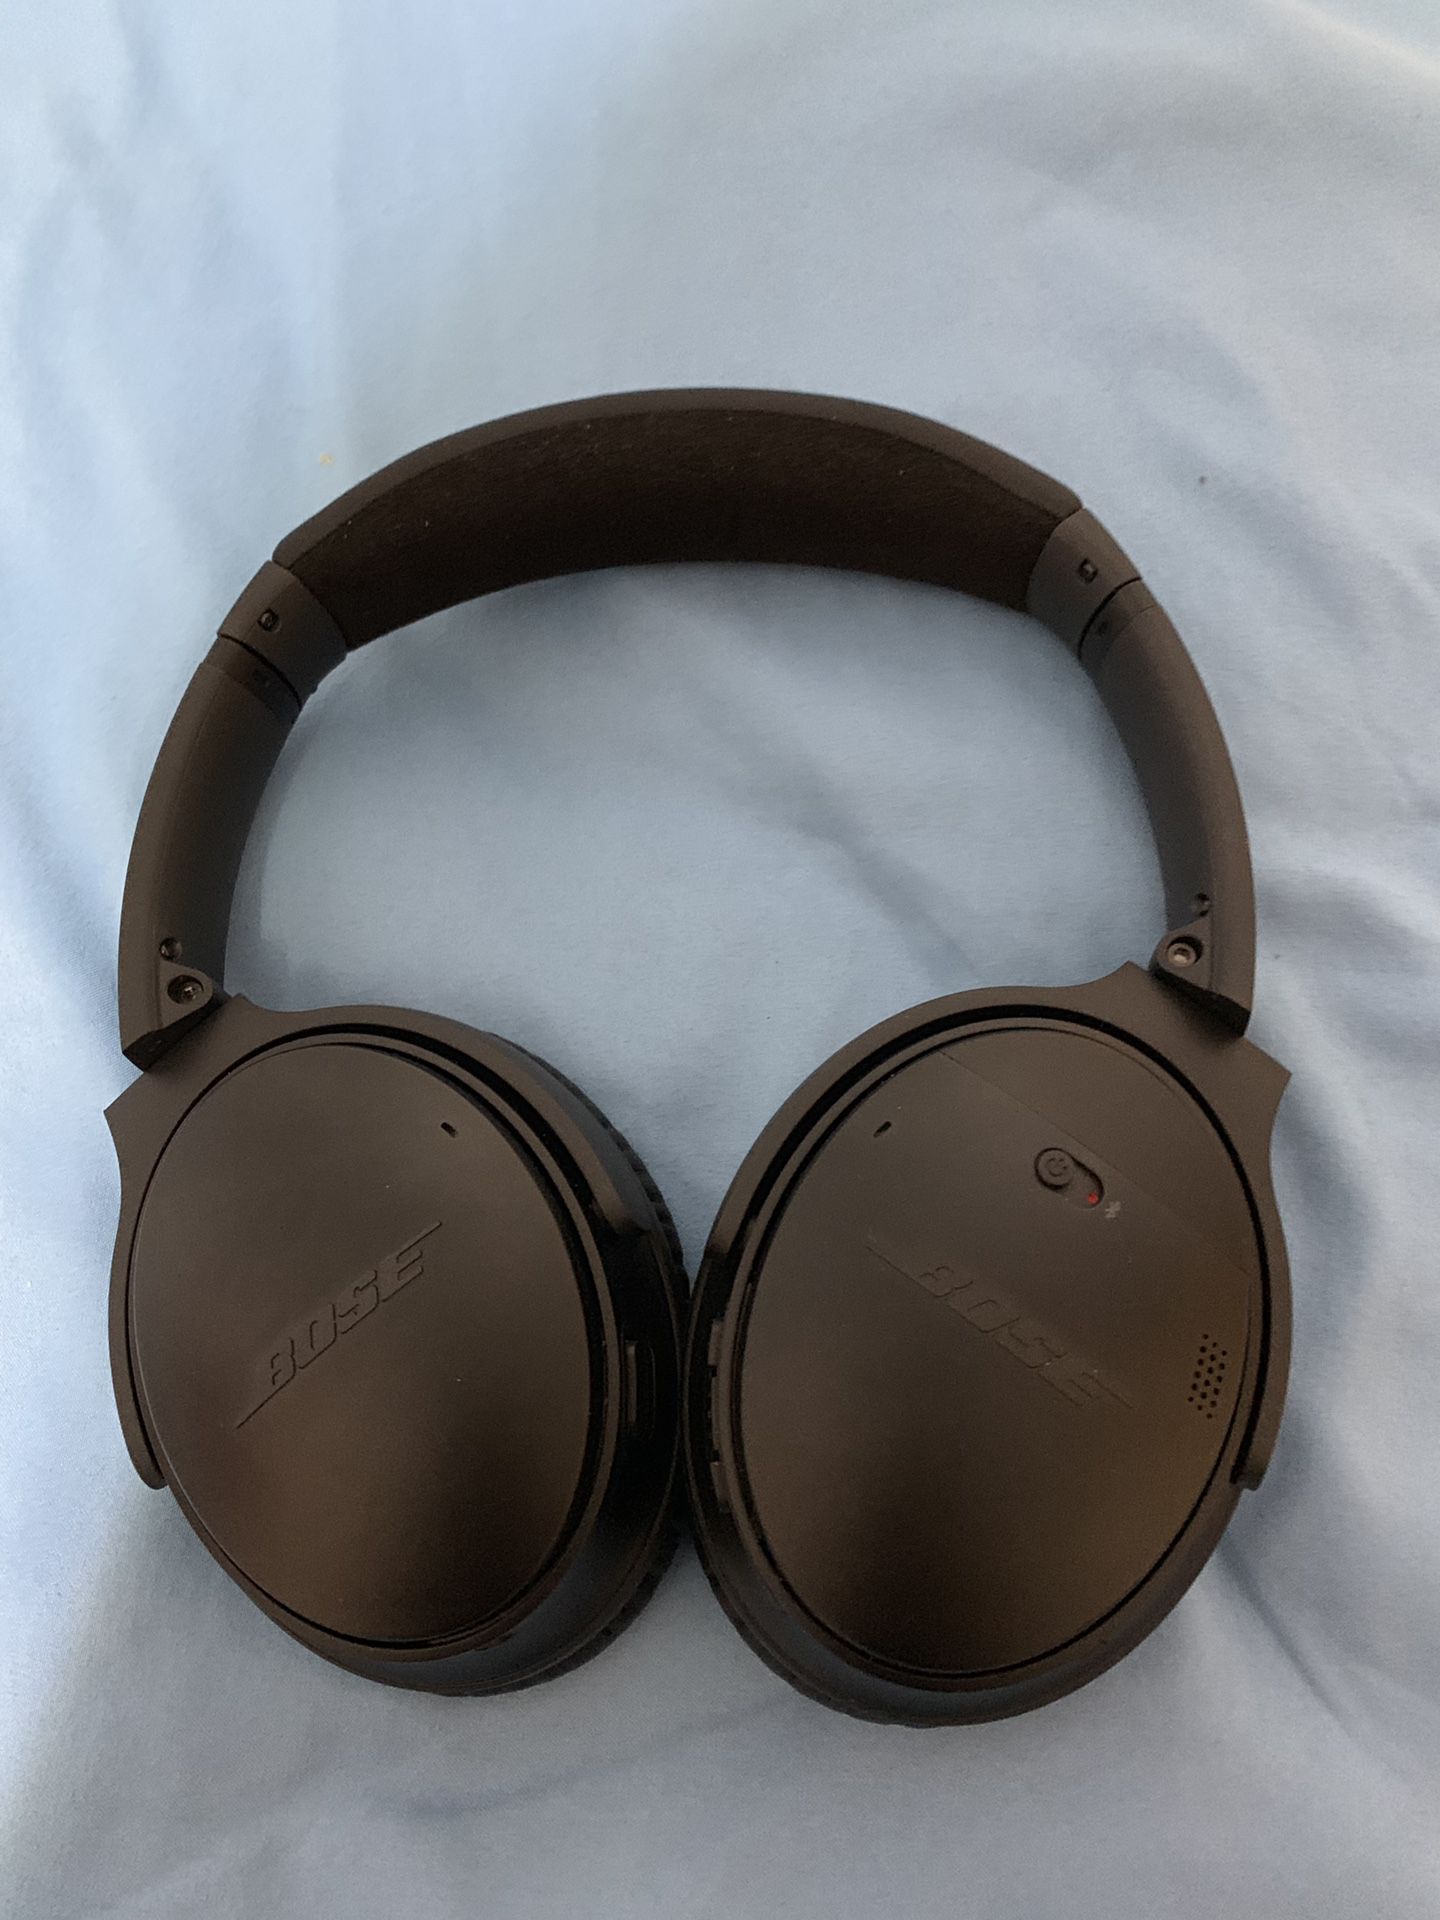 Bose QC 2 wireless headphones